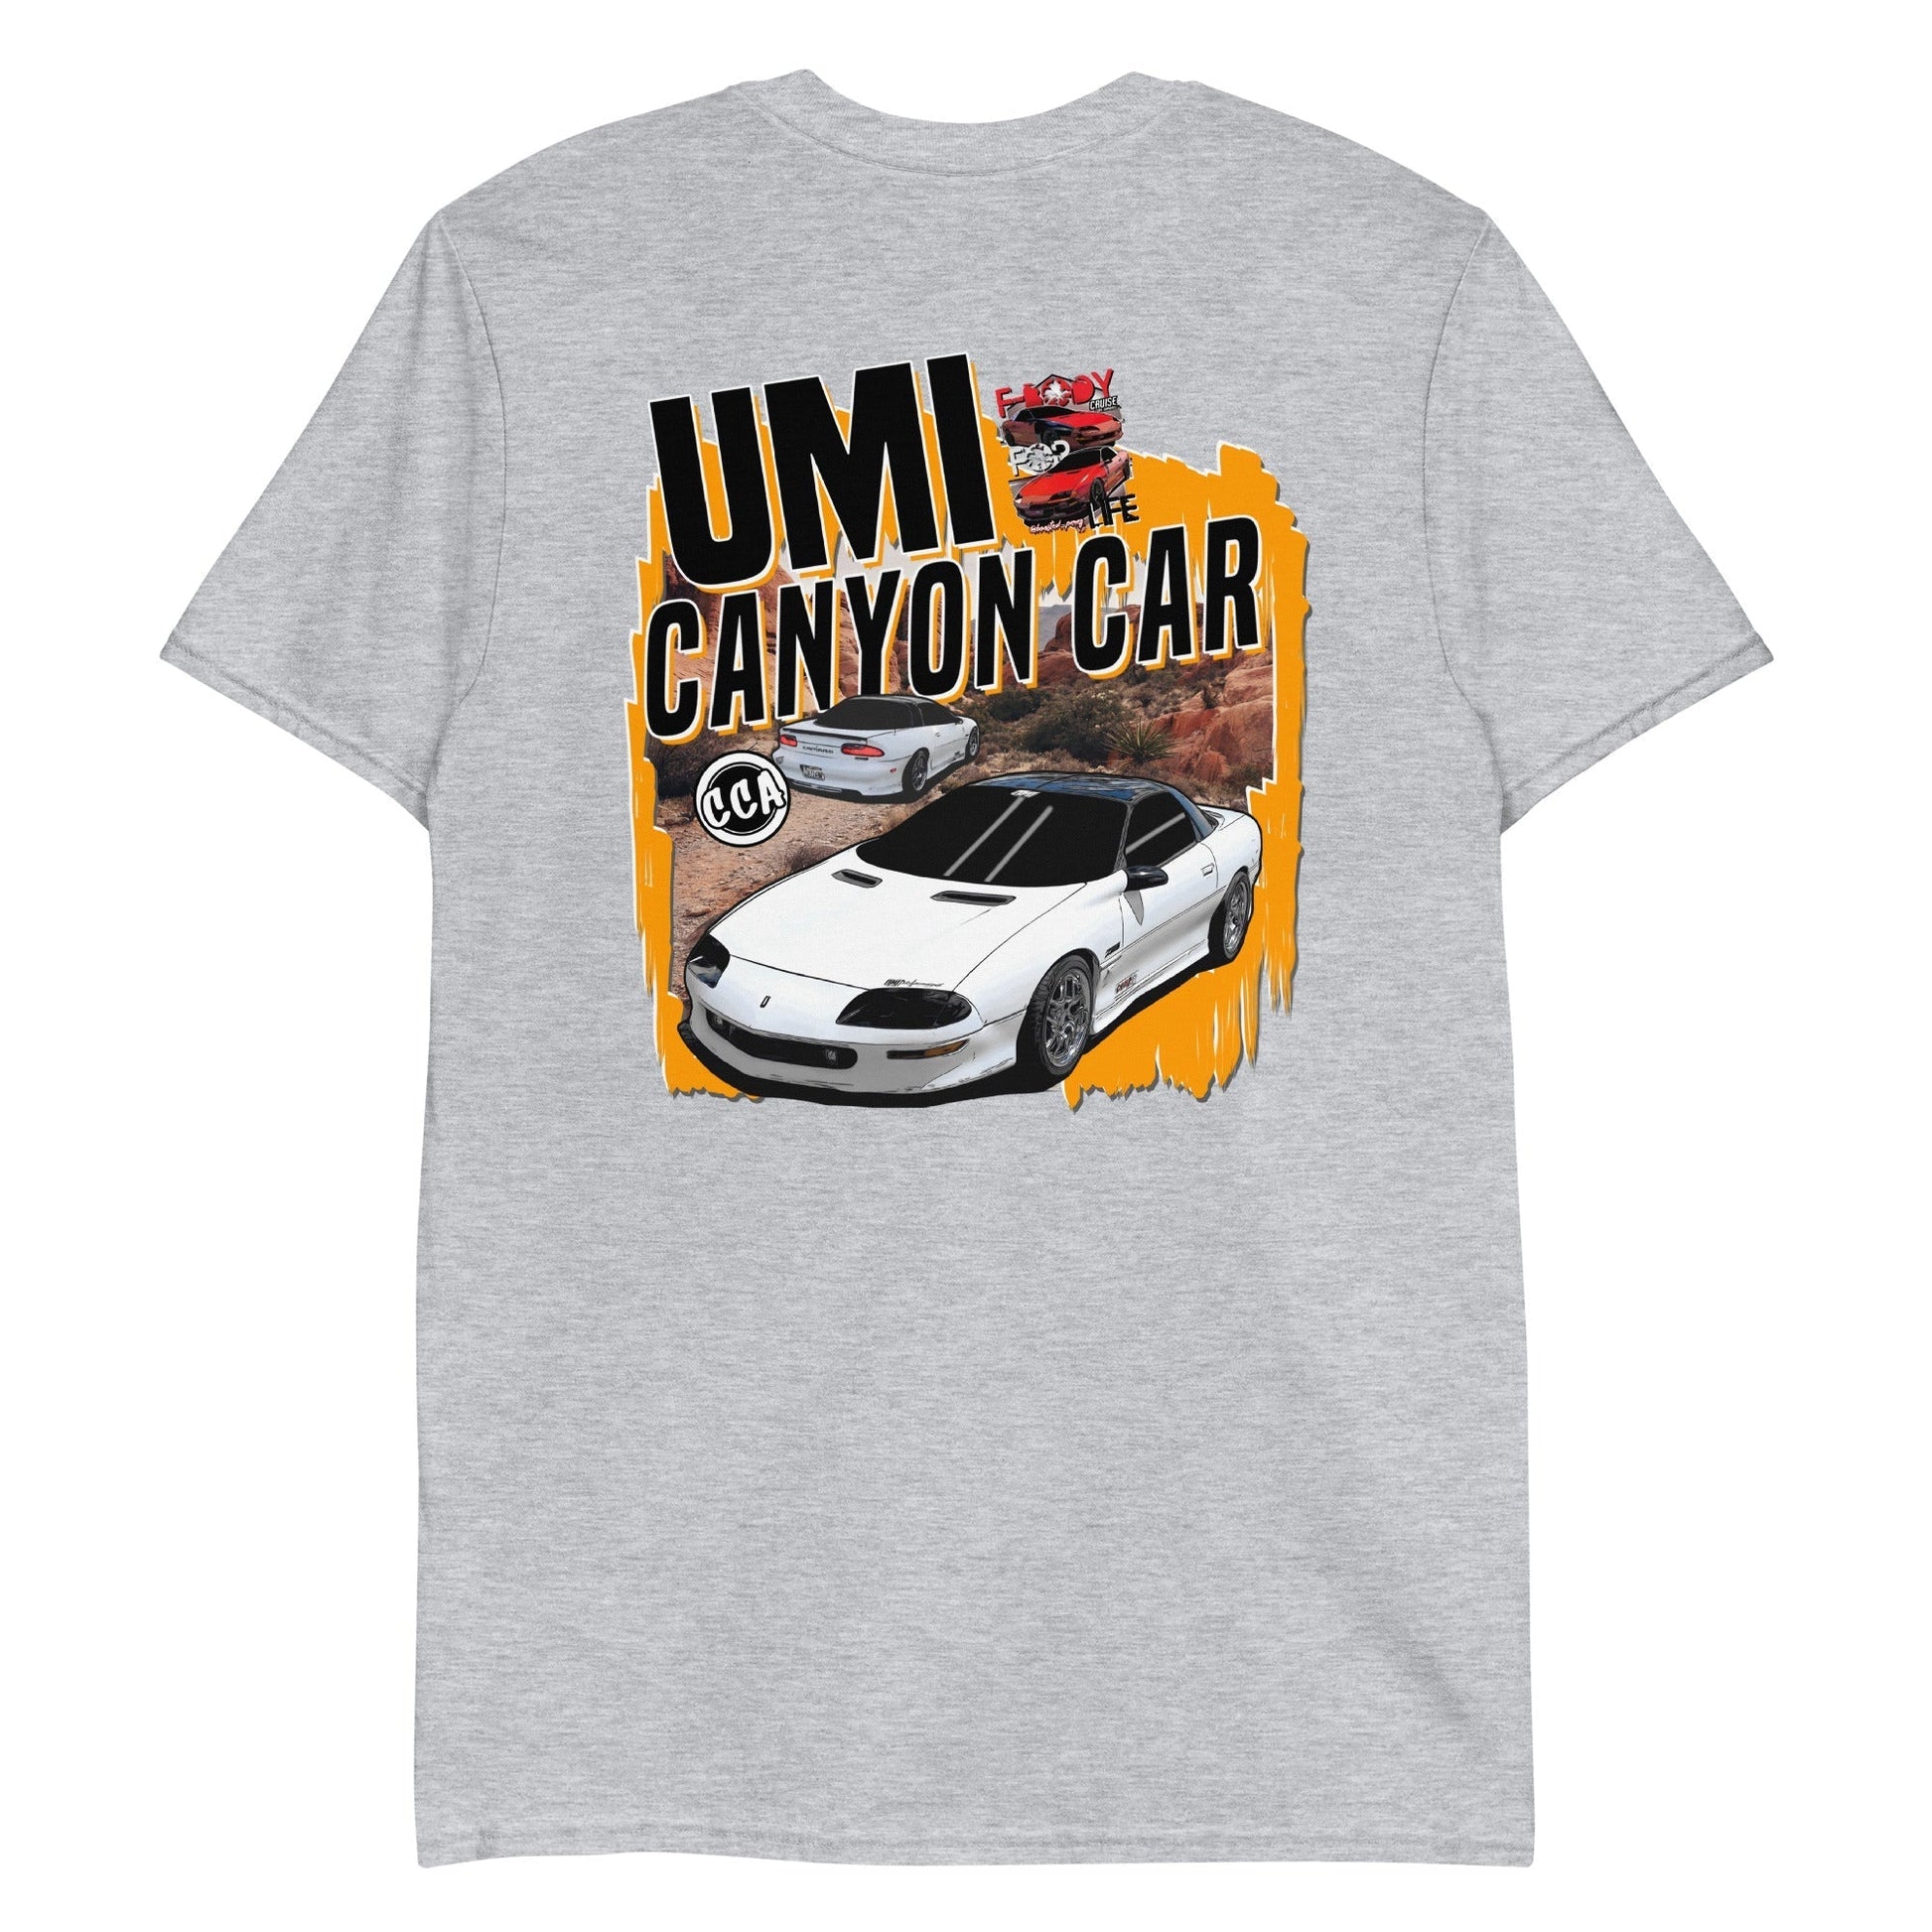 UMI Canyon Car T-Shirt Back